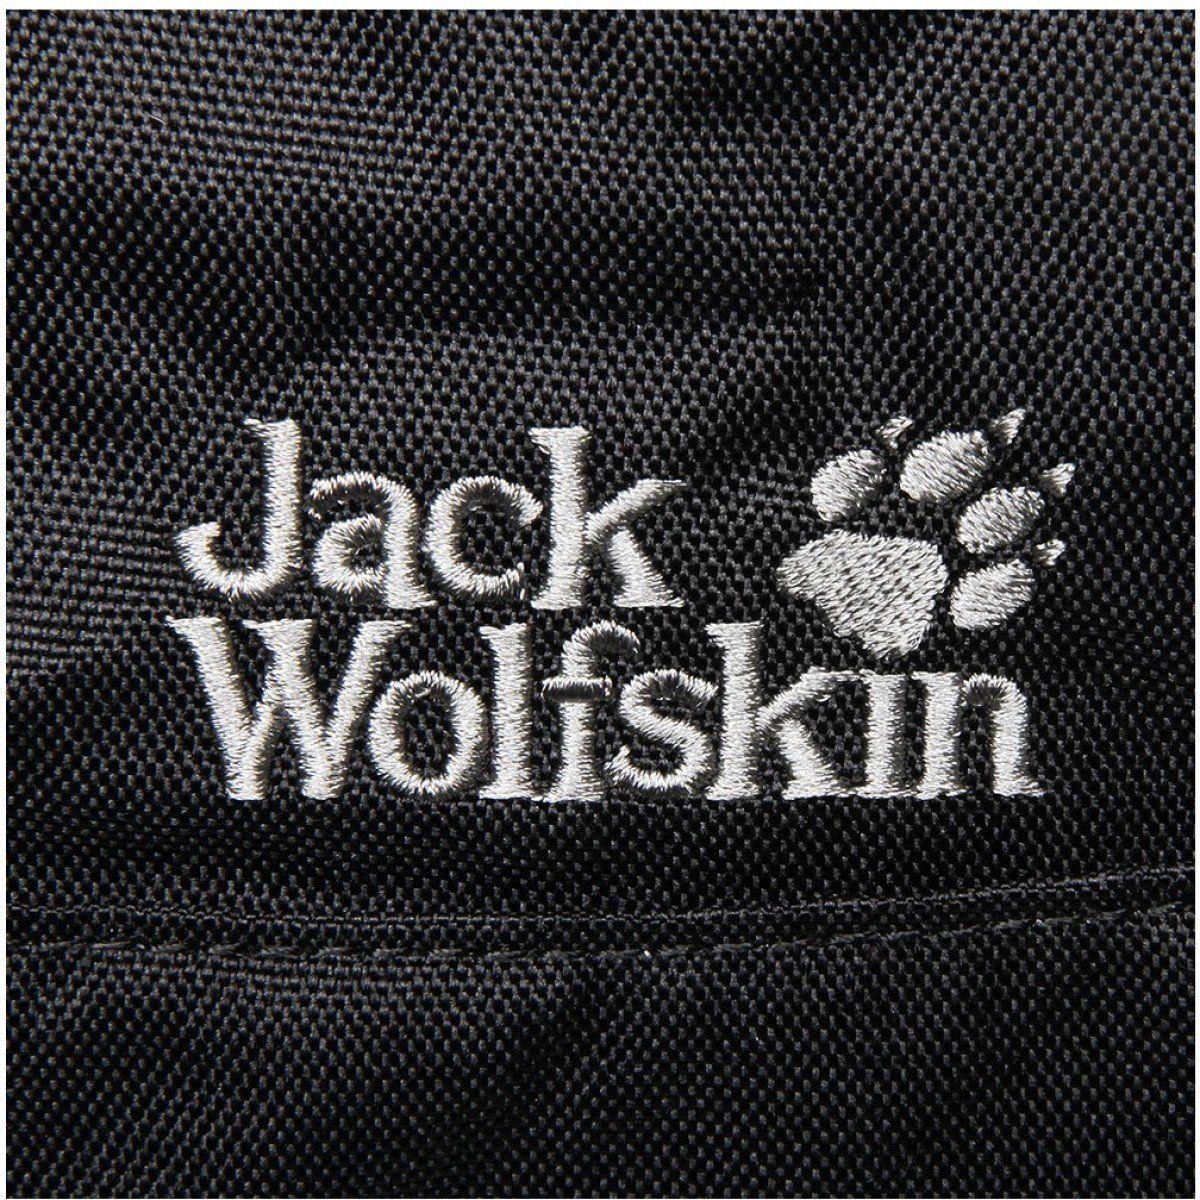 Jack Wolfskin Logo - Jack Wolfskin Perfect Day: Amazon.co.uk: Sports & Outdoors